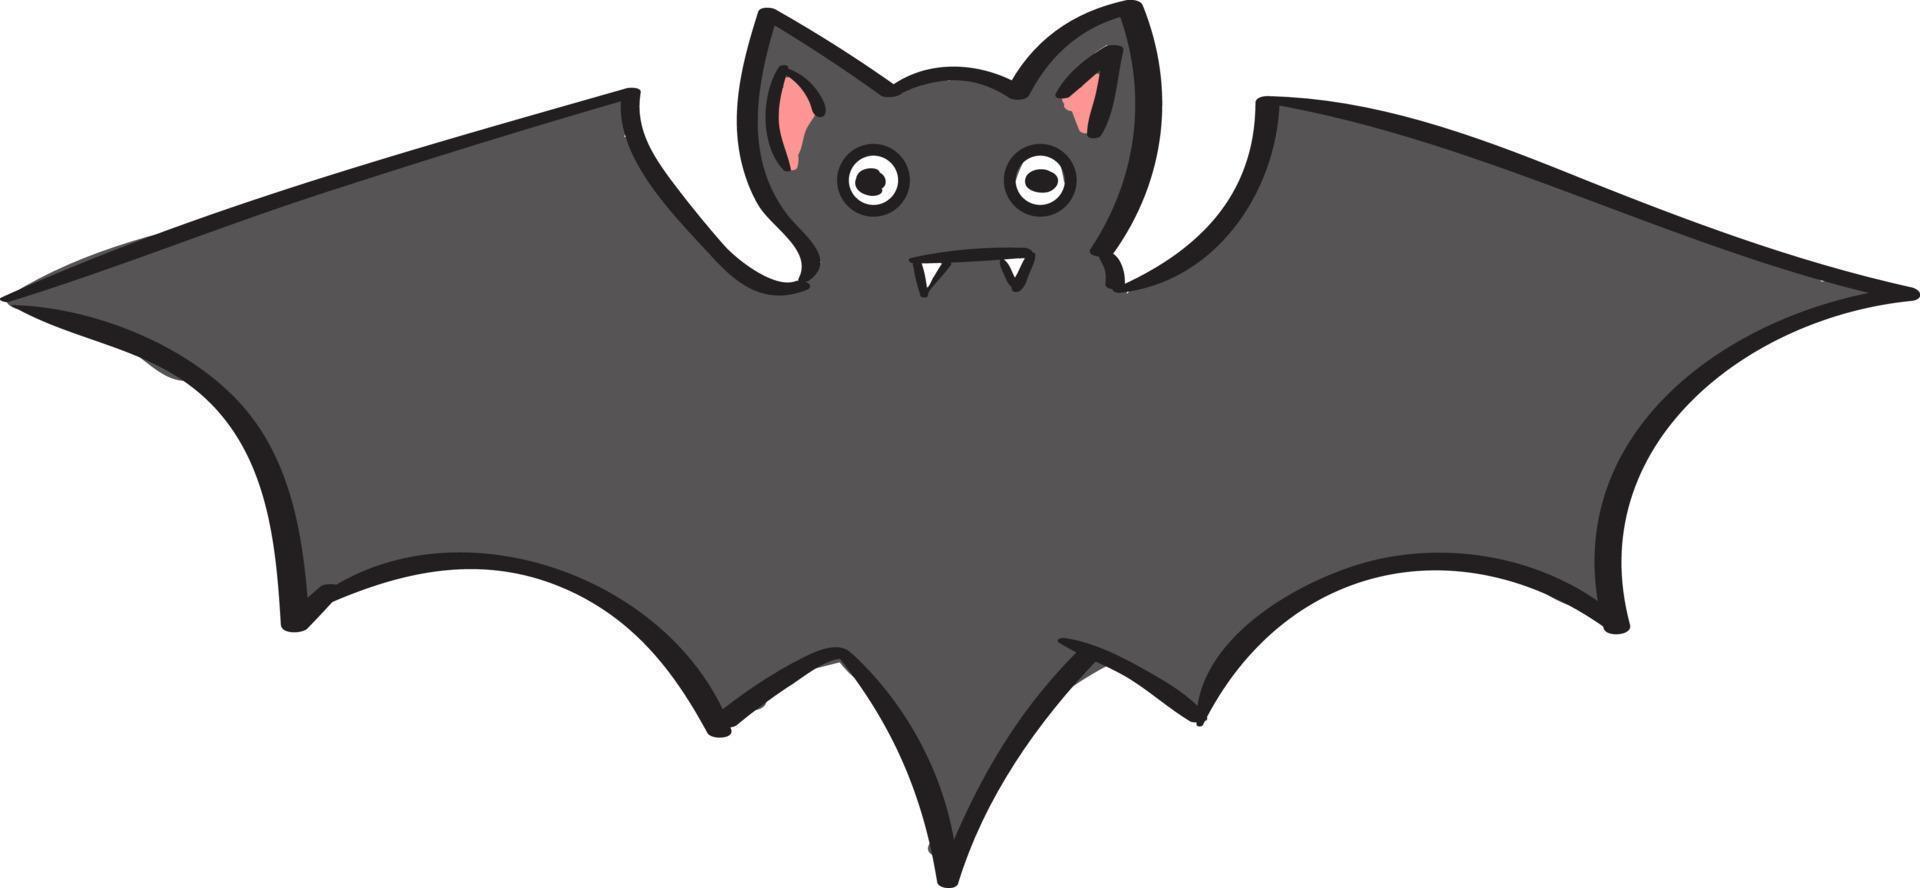 Black bat, illustration, vector on white background.